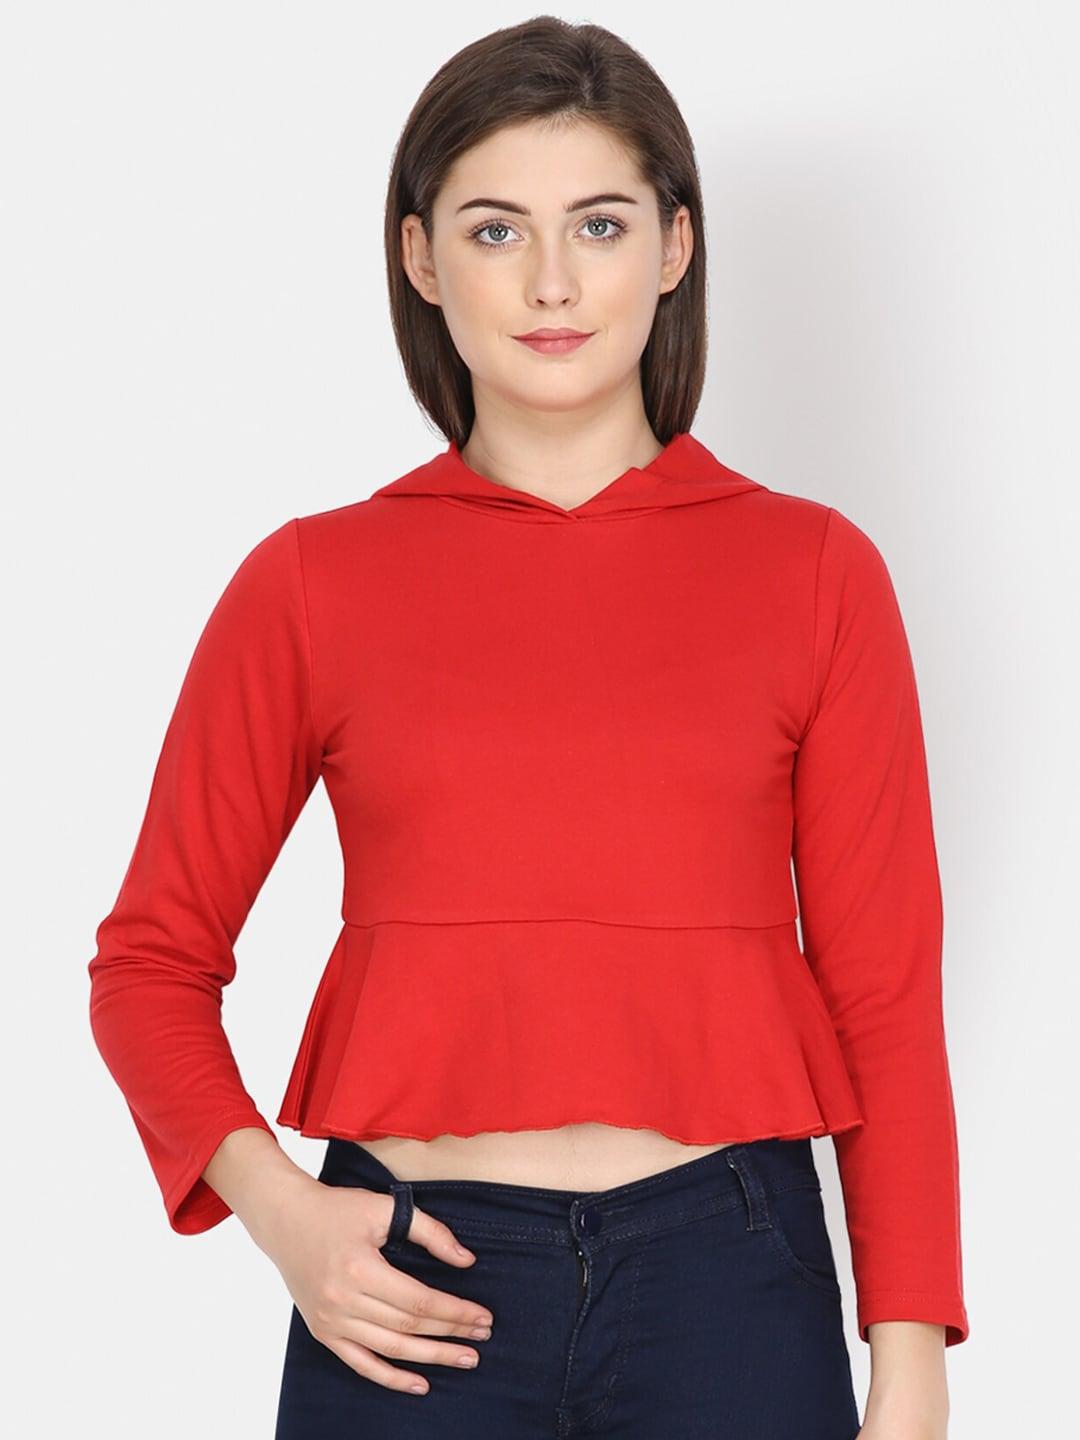 yaadleen women red solid hooded sweatshirt